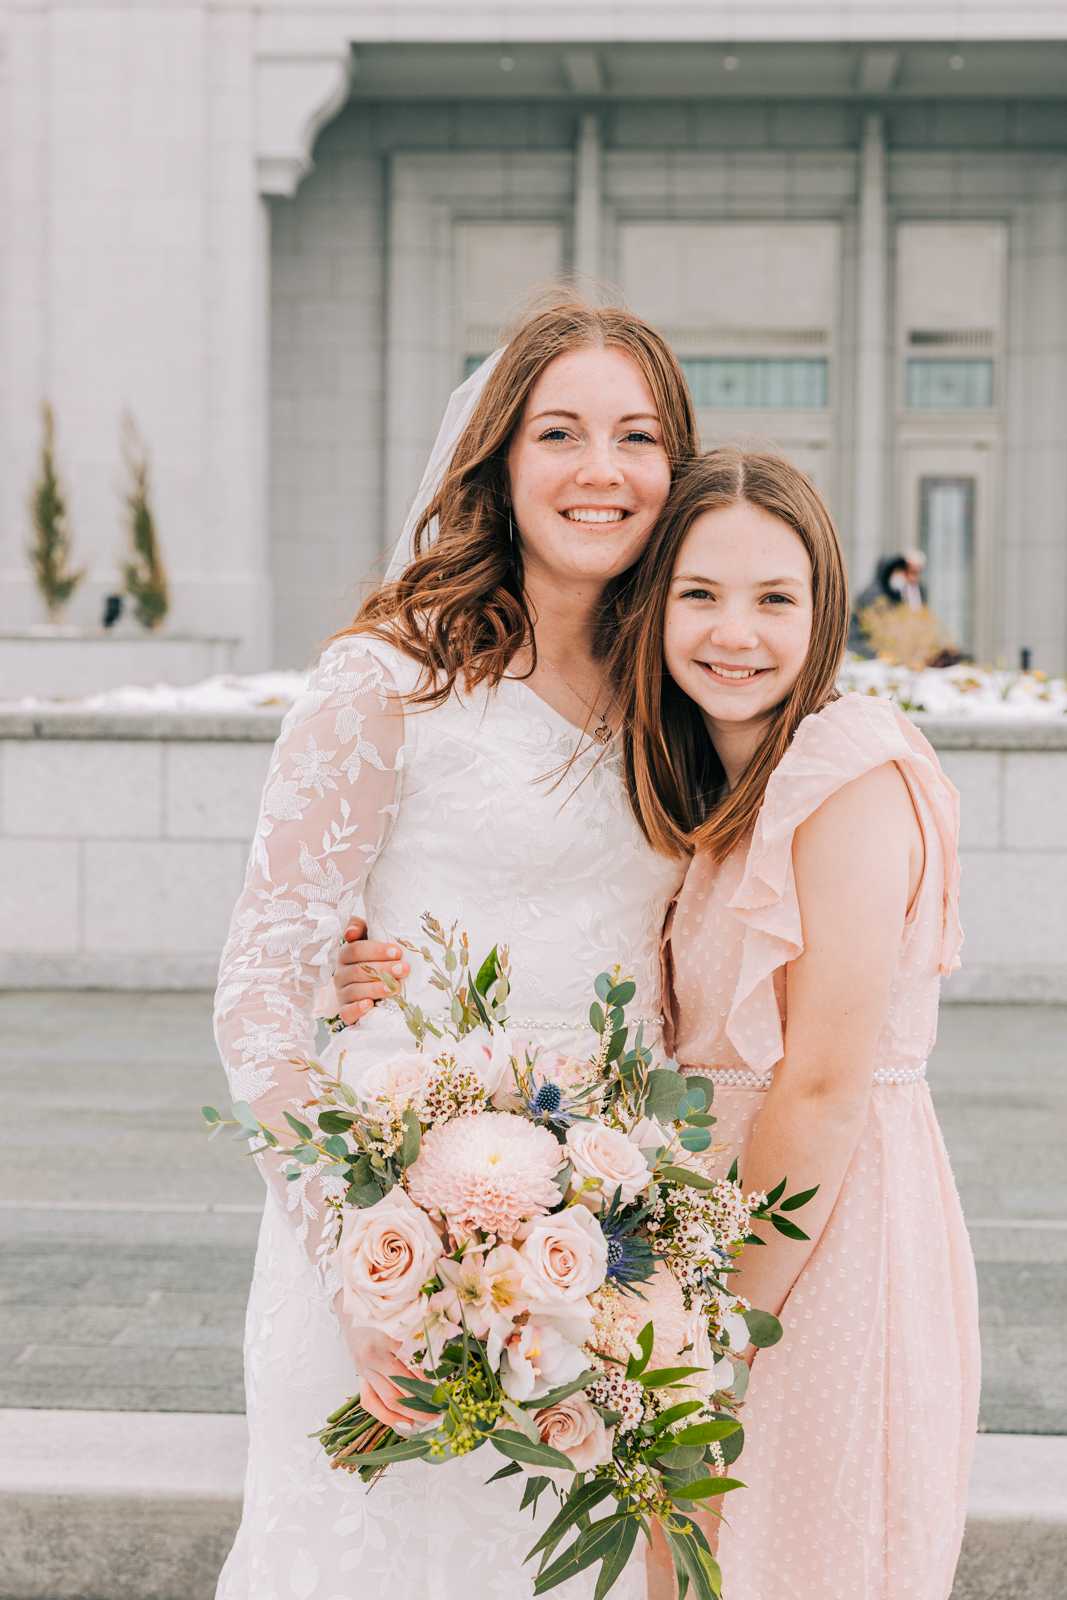 Jackson Hole wedding photographer capturesbride and little sister